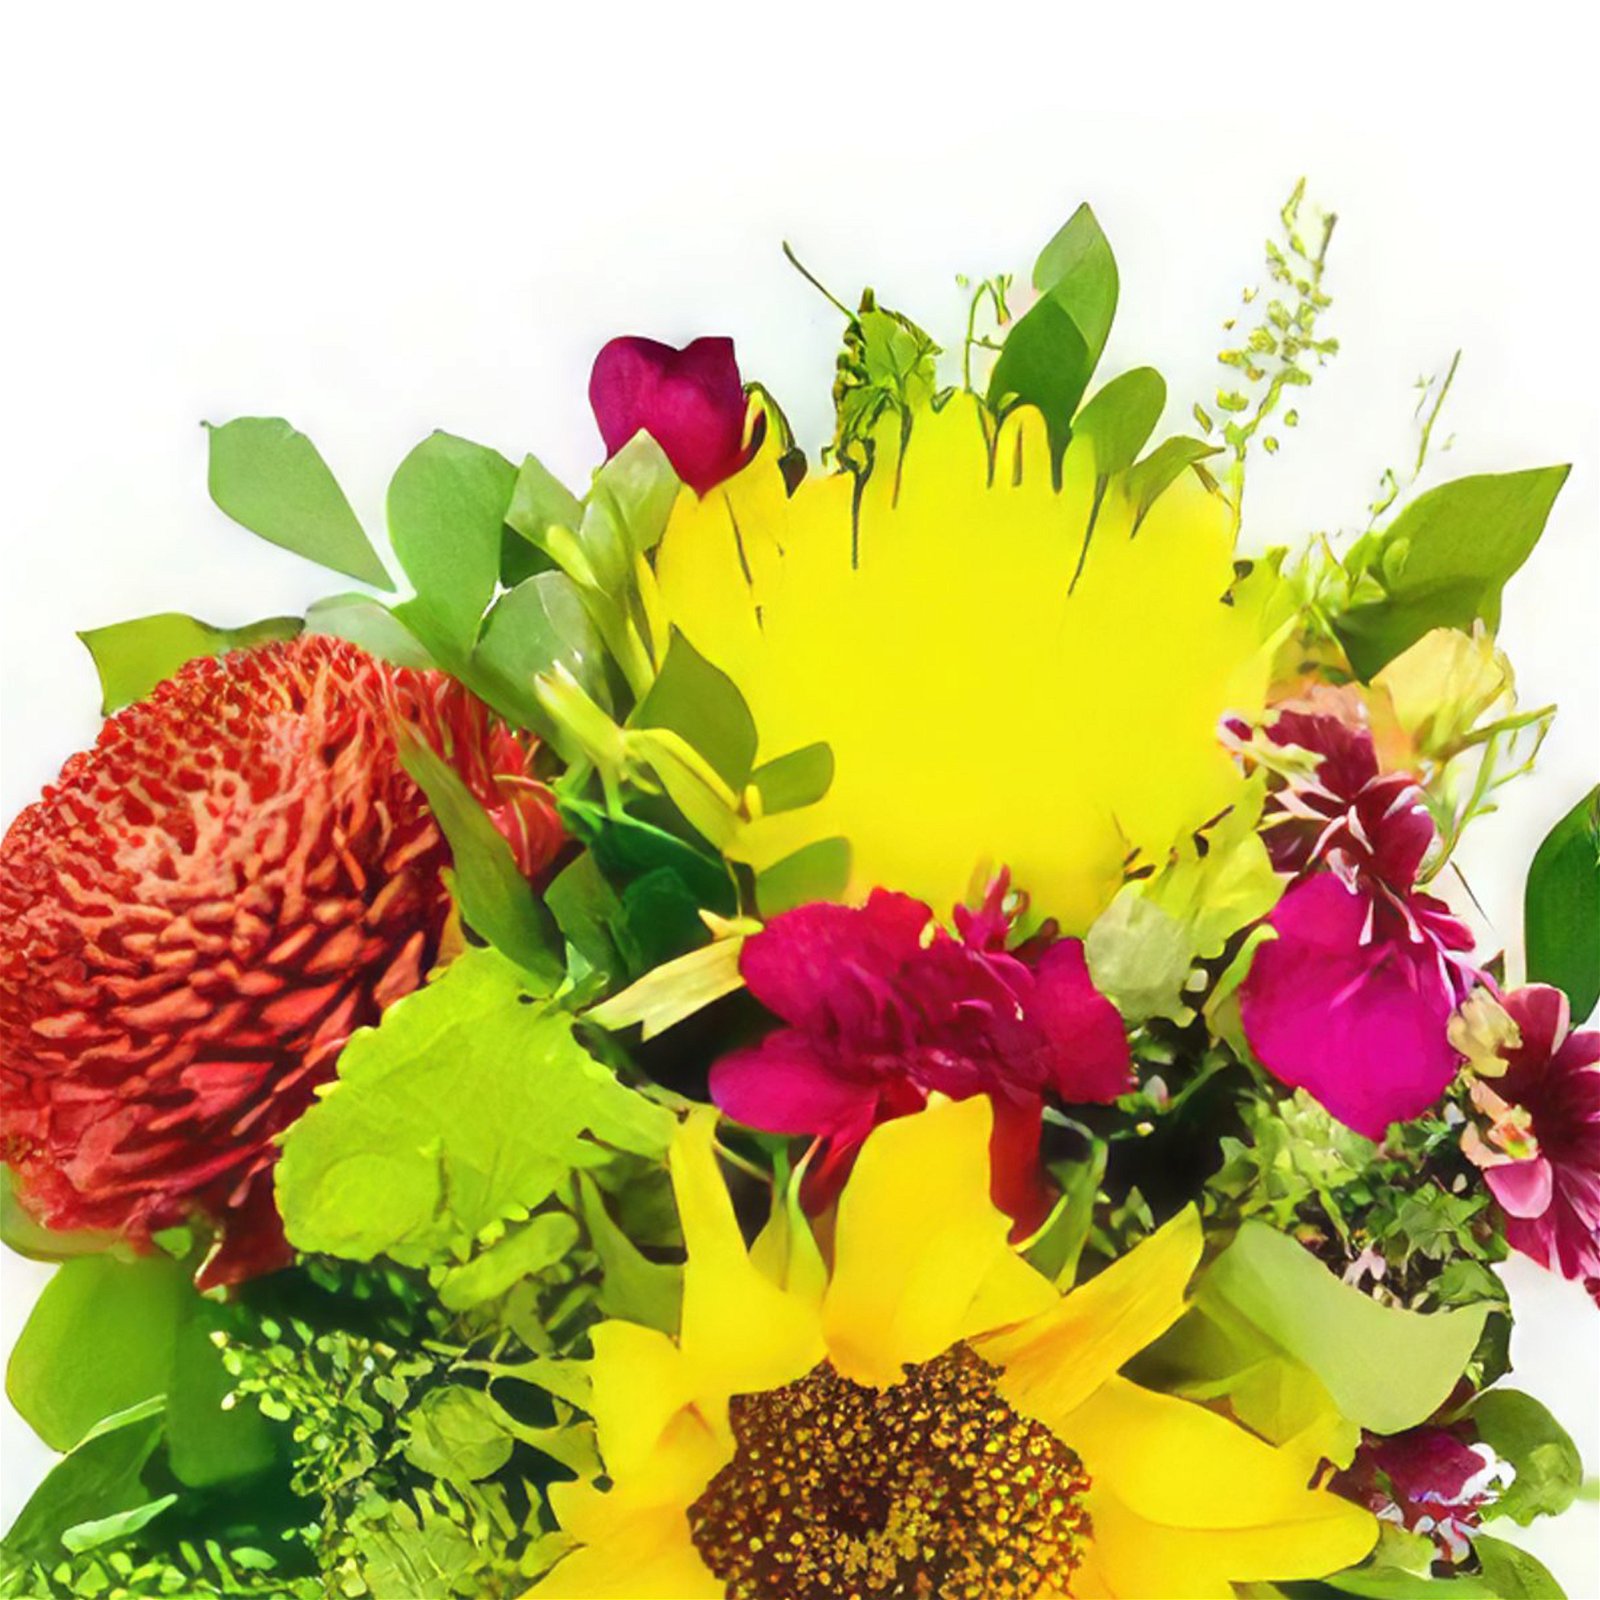 Ariguanabo flowers  -  Spring love Flower Bouquet/Arrangement